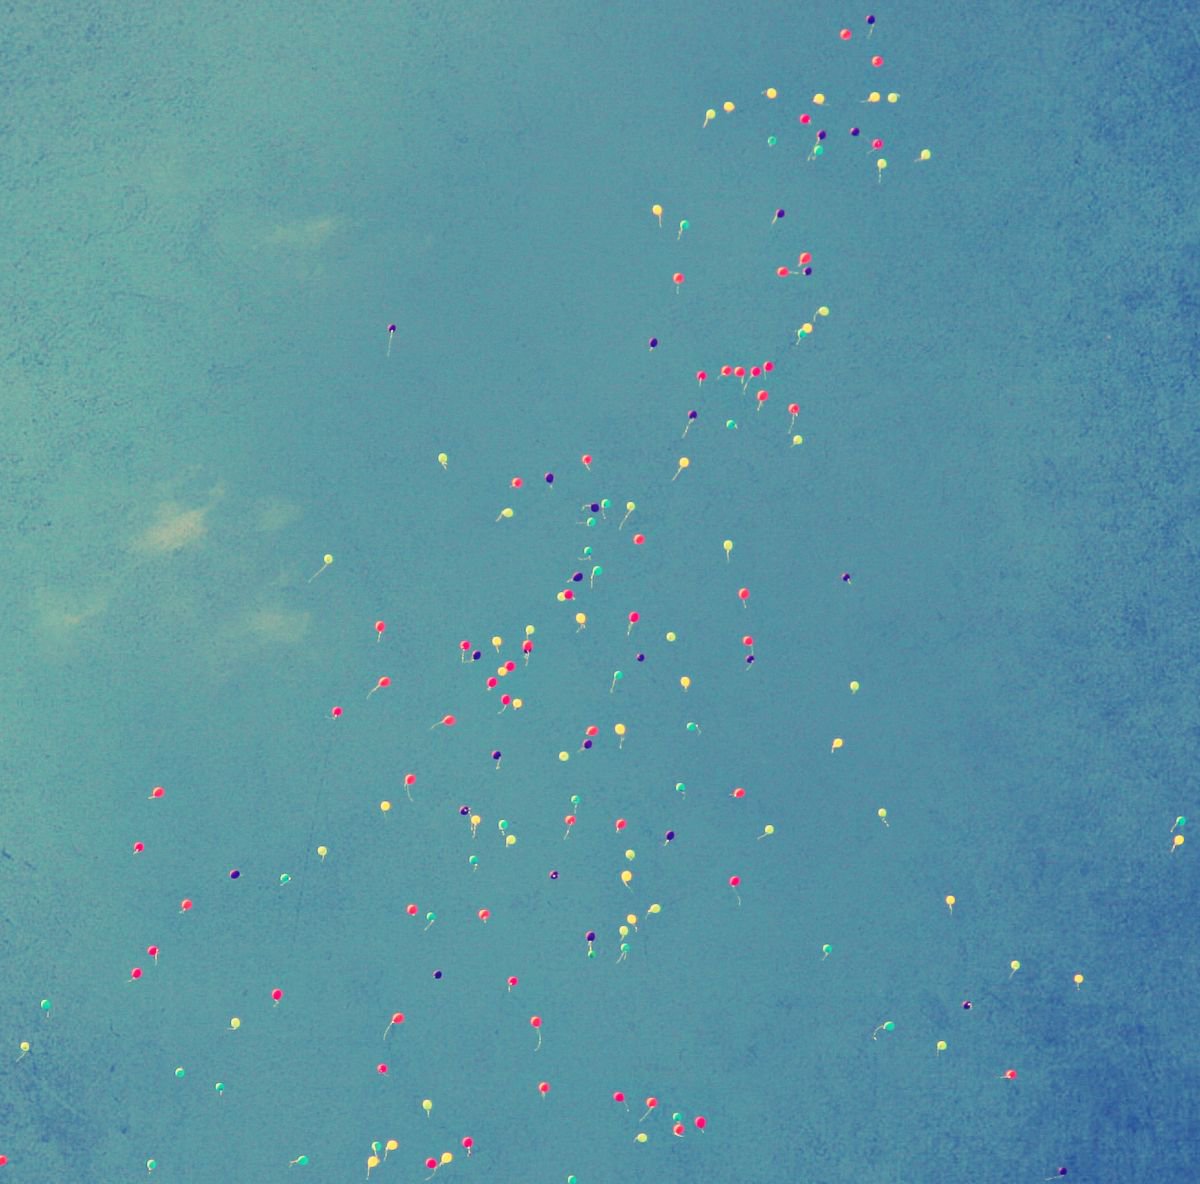 balloons of freedom by Akos Nagy